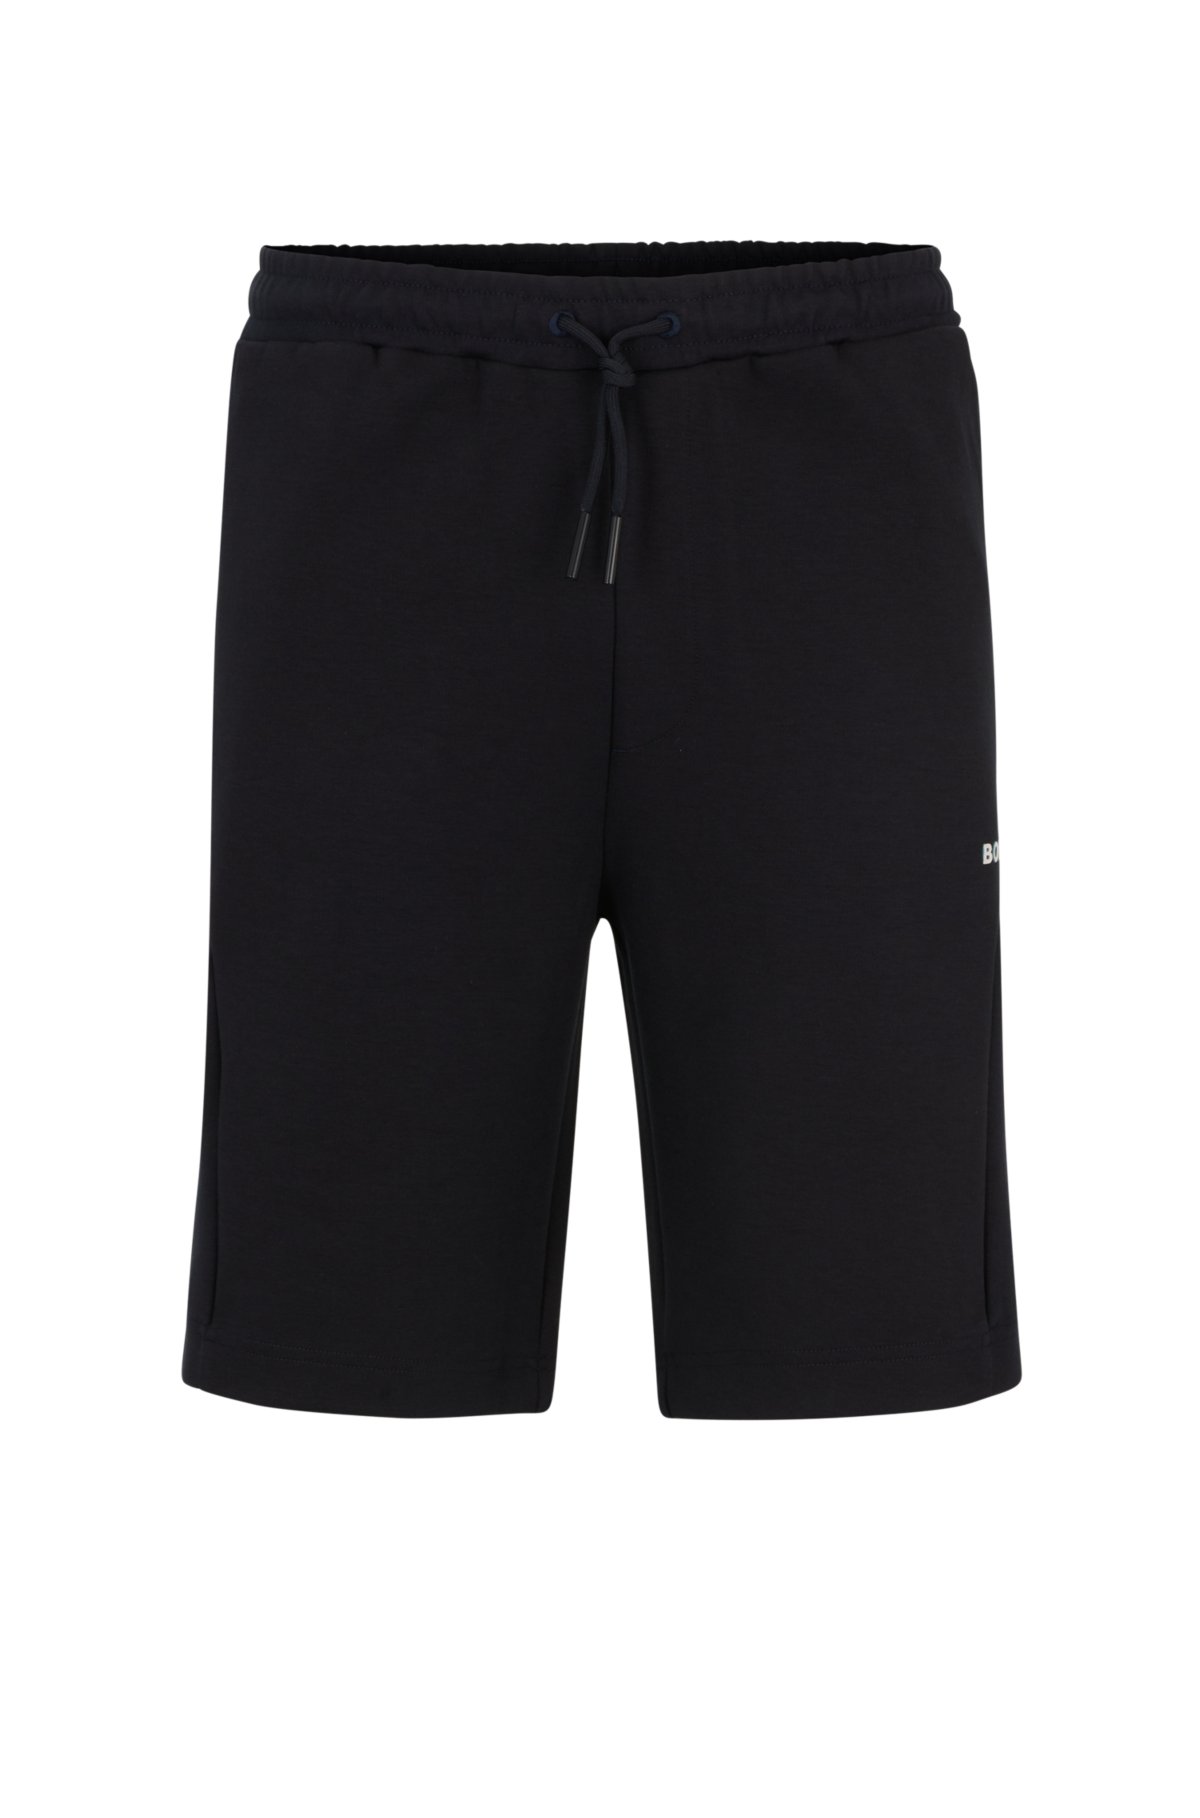 BOSS - Shorts with logo print